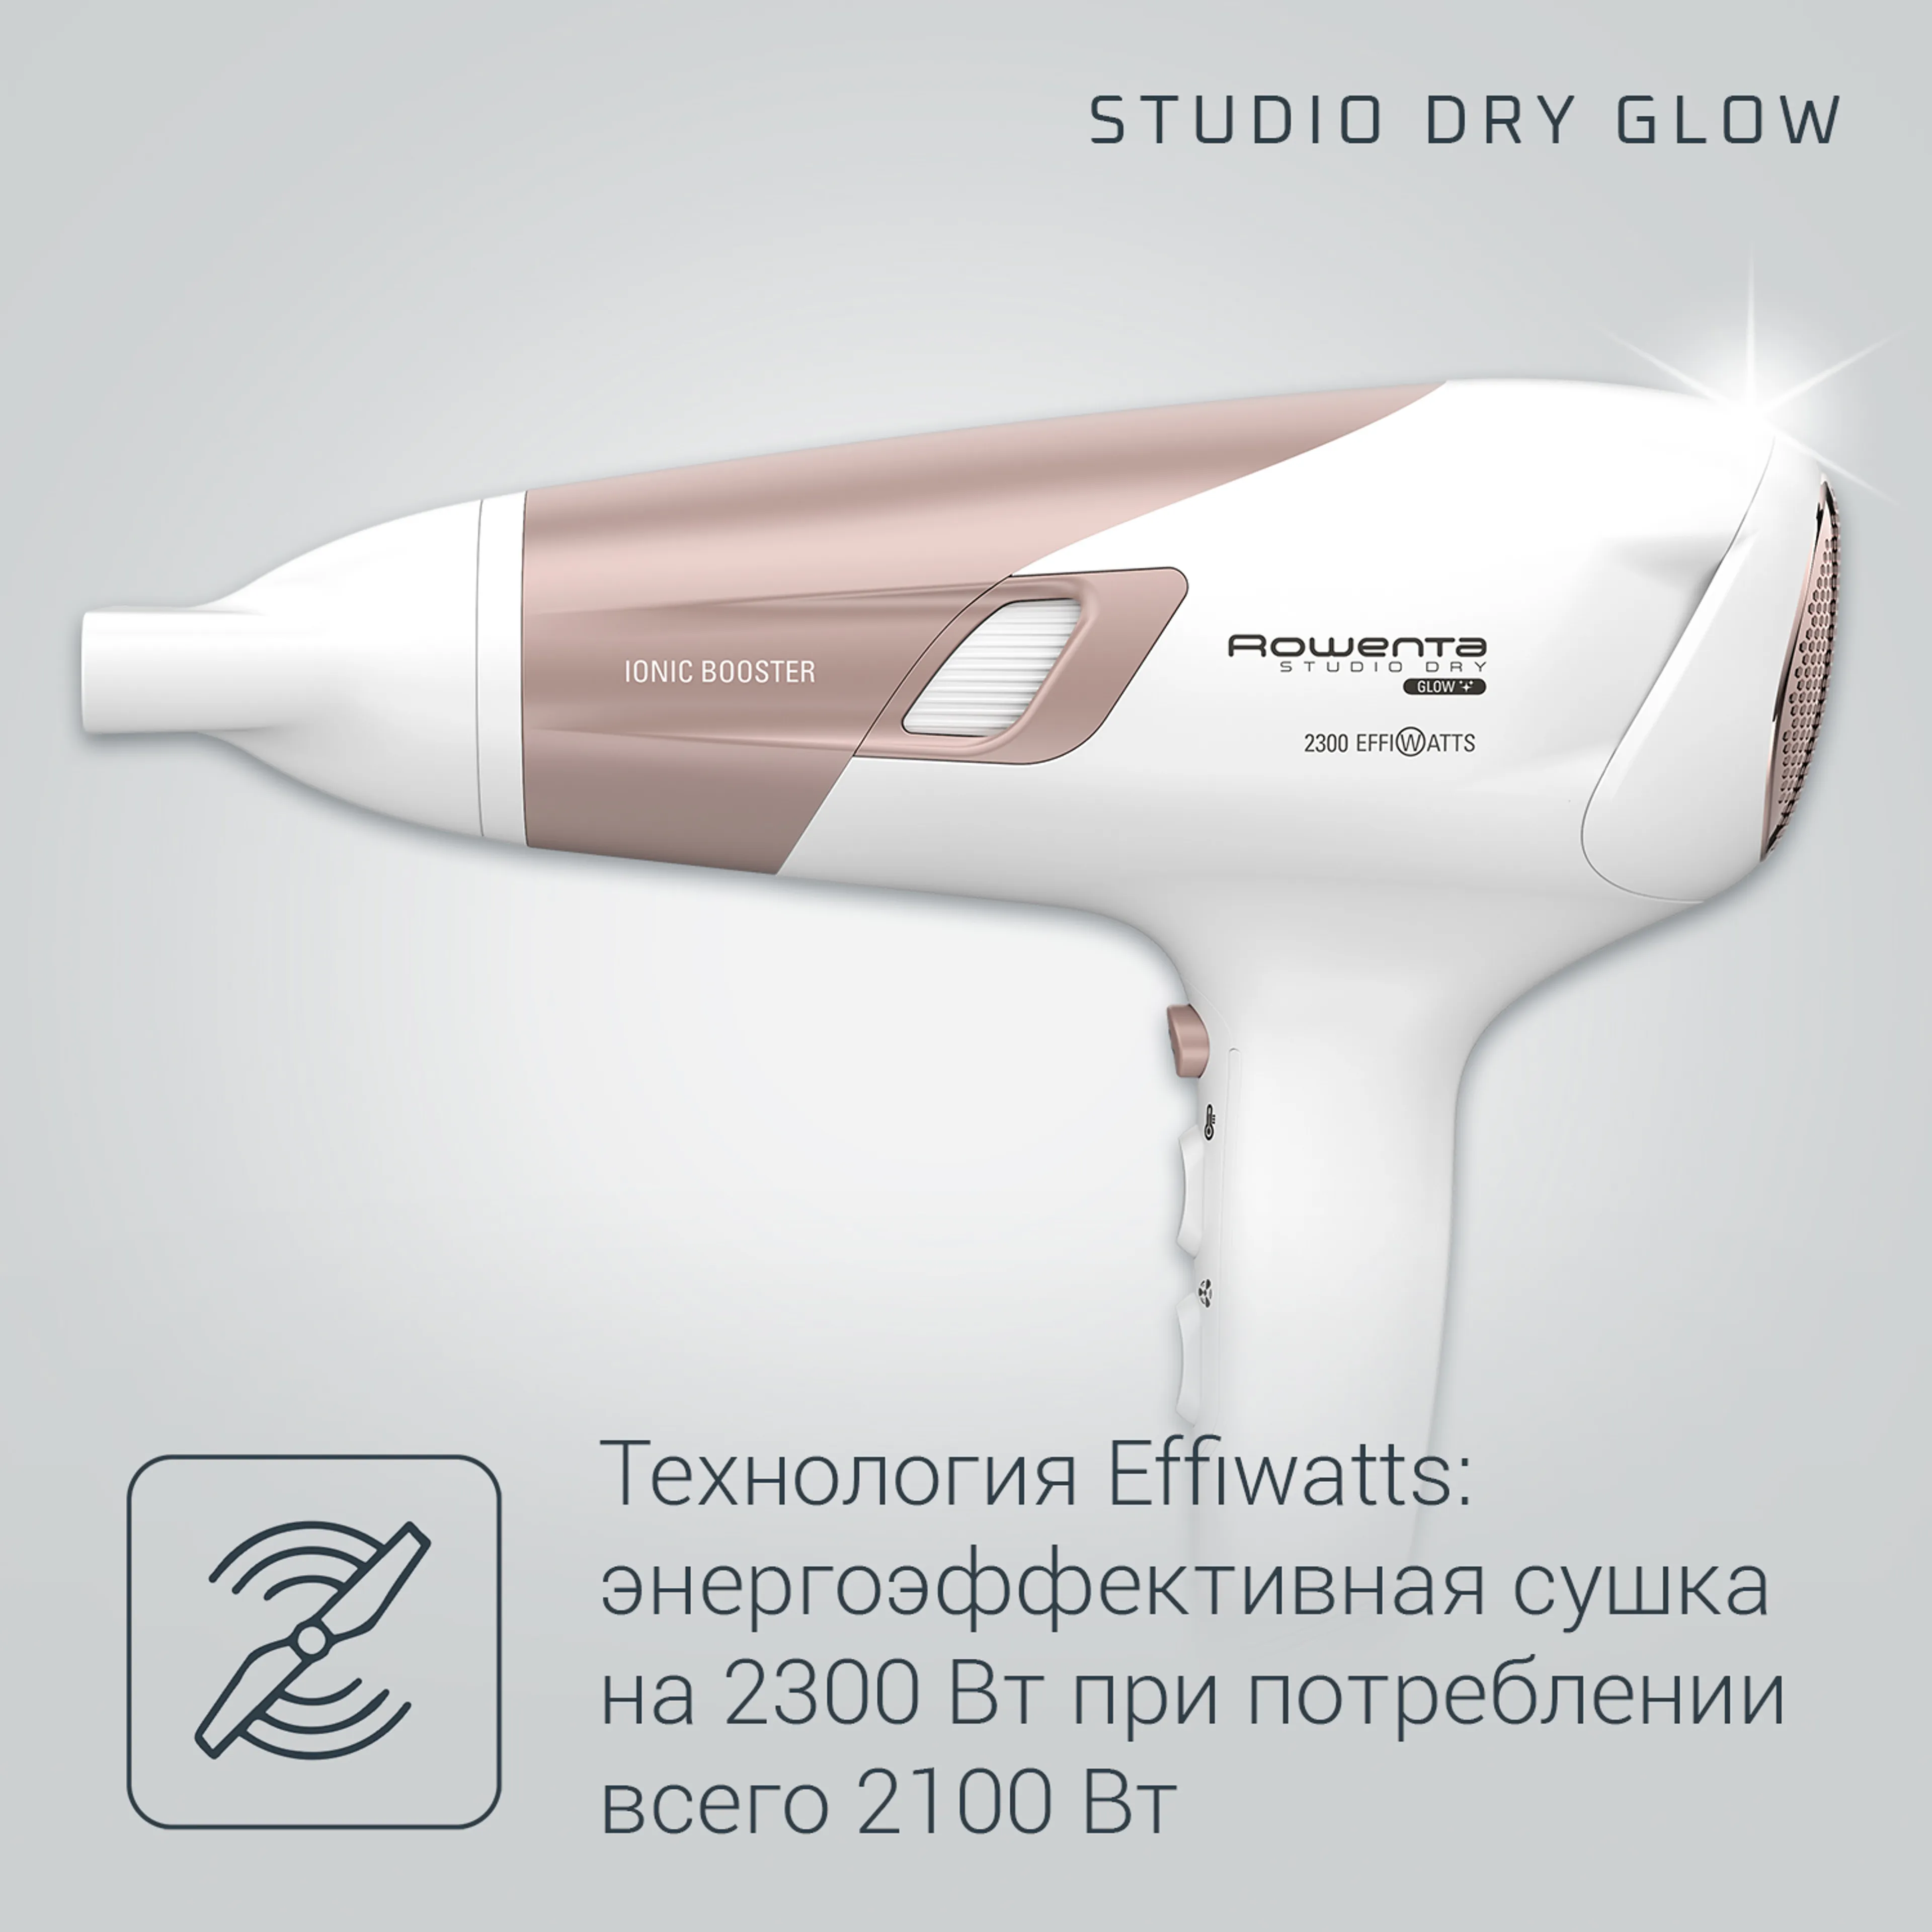 Фен ROWENTA Studio Dry Glow CV5830F0